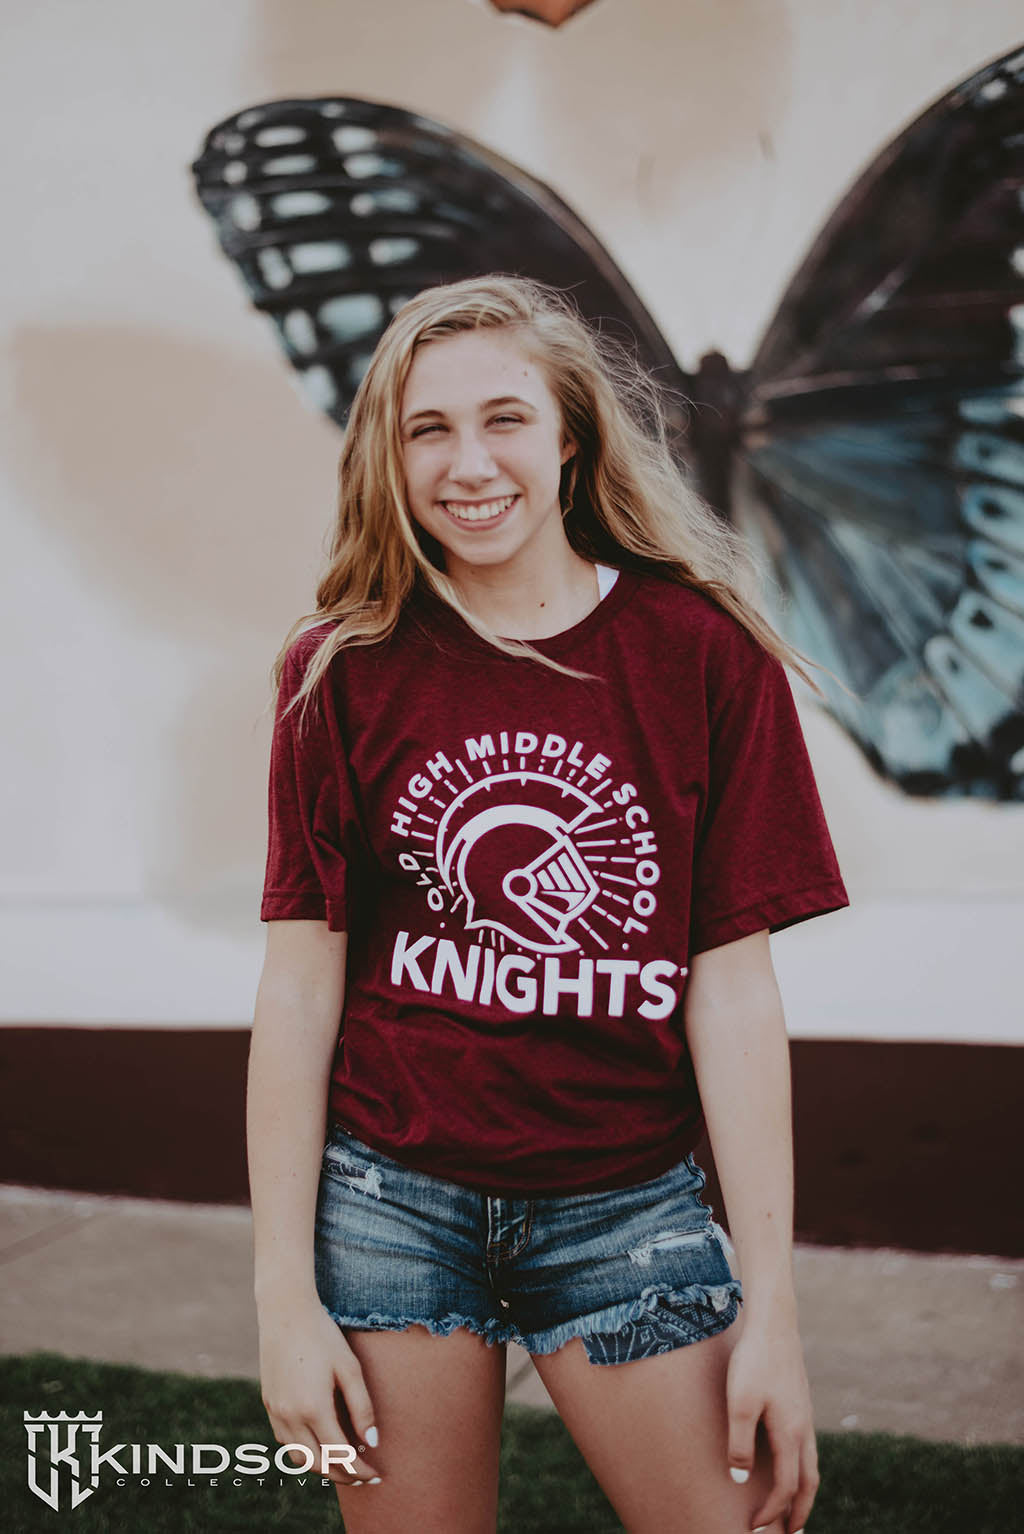 Old High Middle School Knights Tshirt